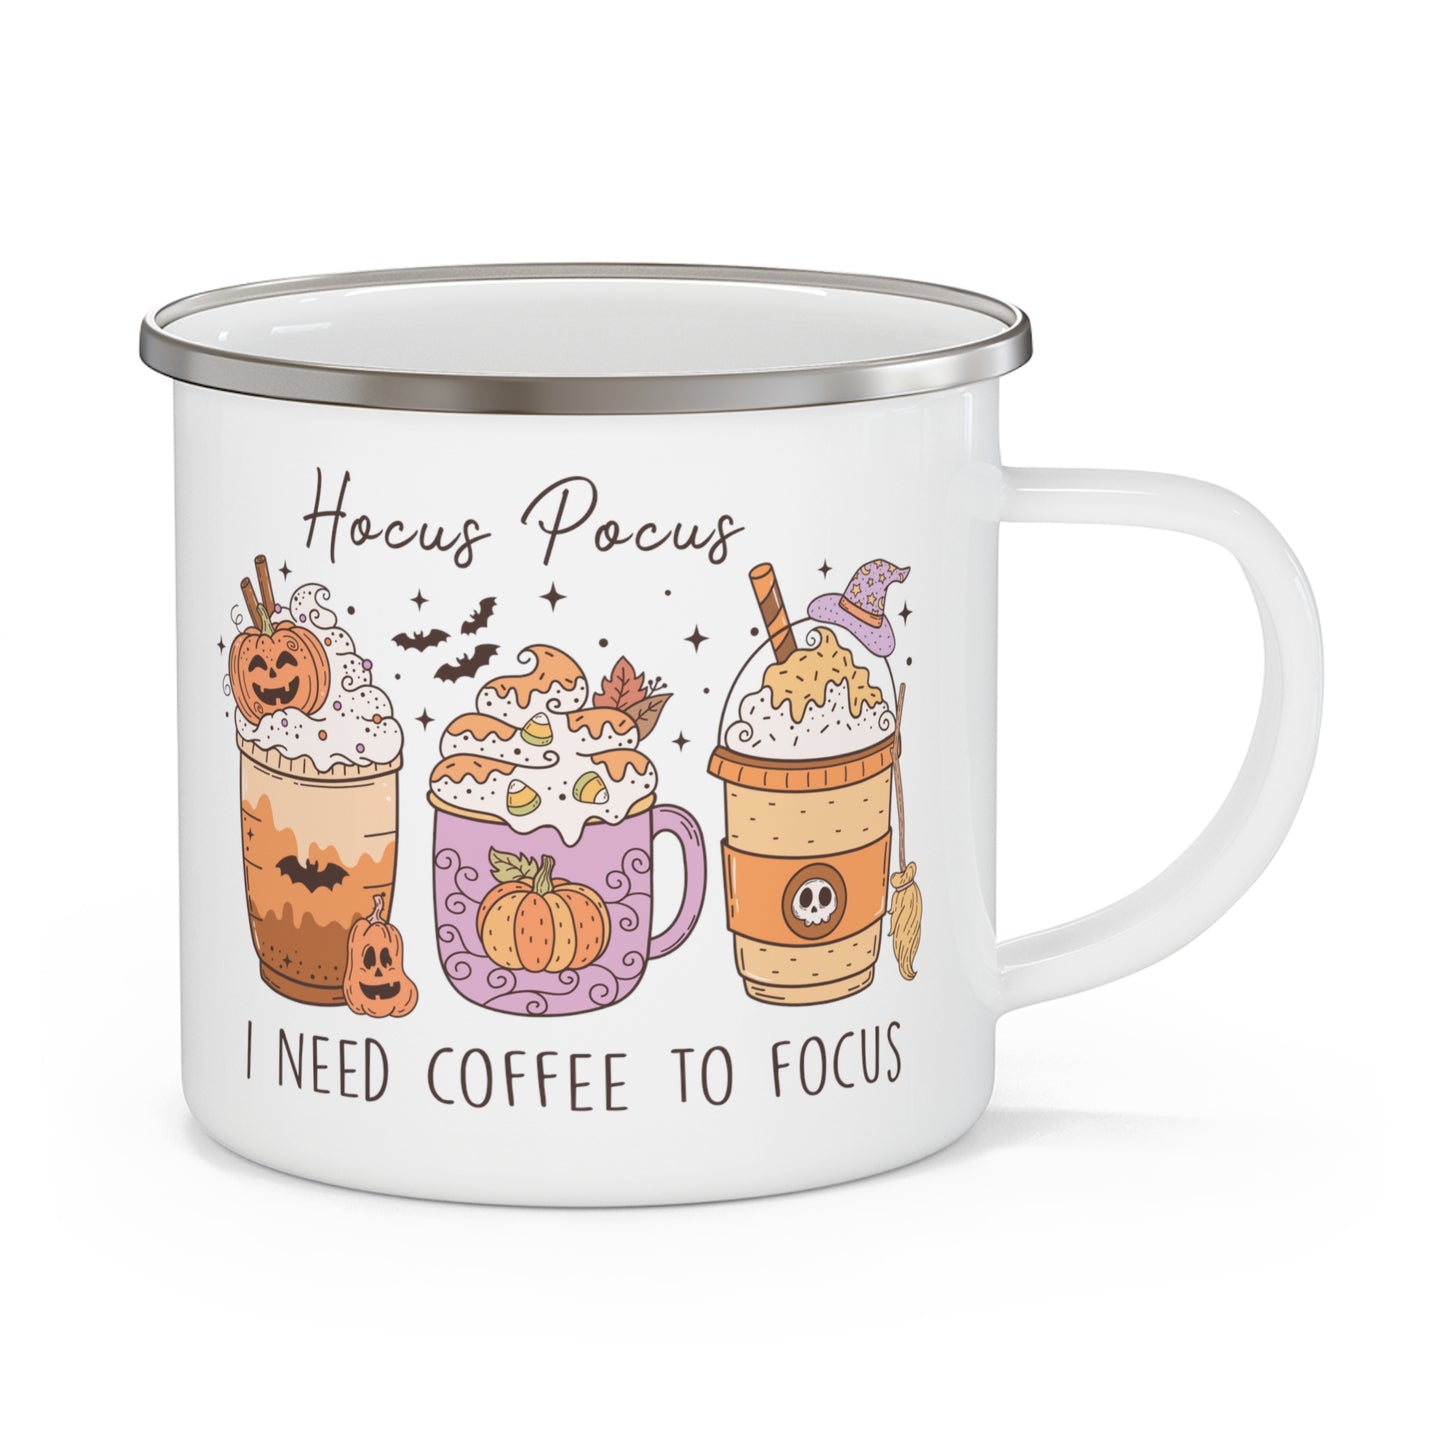 I Need Coffee to Focus" Halloween Enamel Mug - Spooky Sips for Halloween Enthusiasts